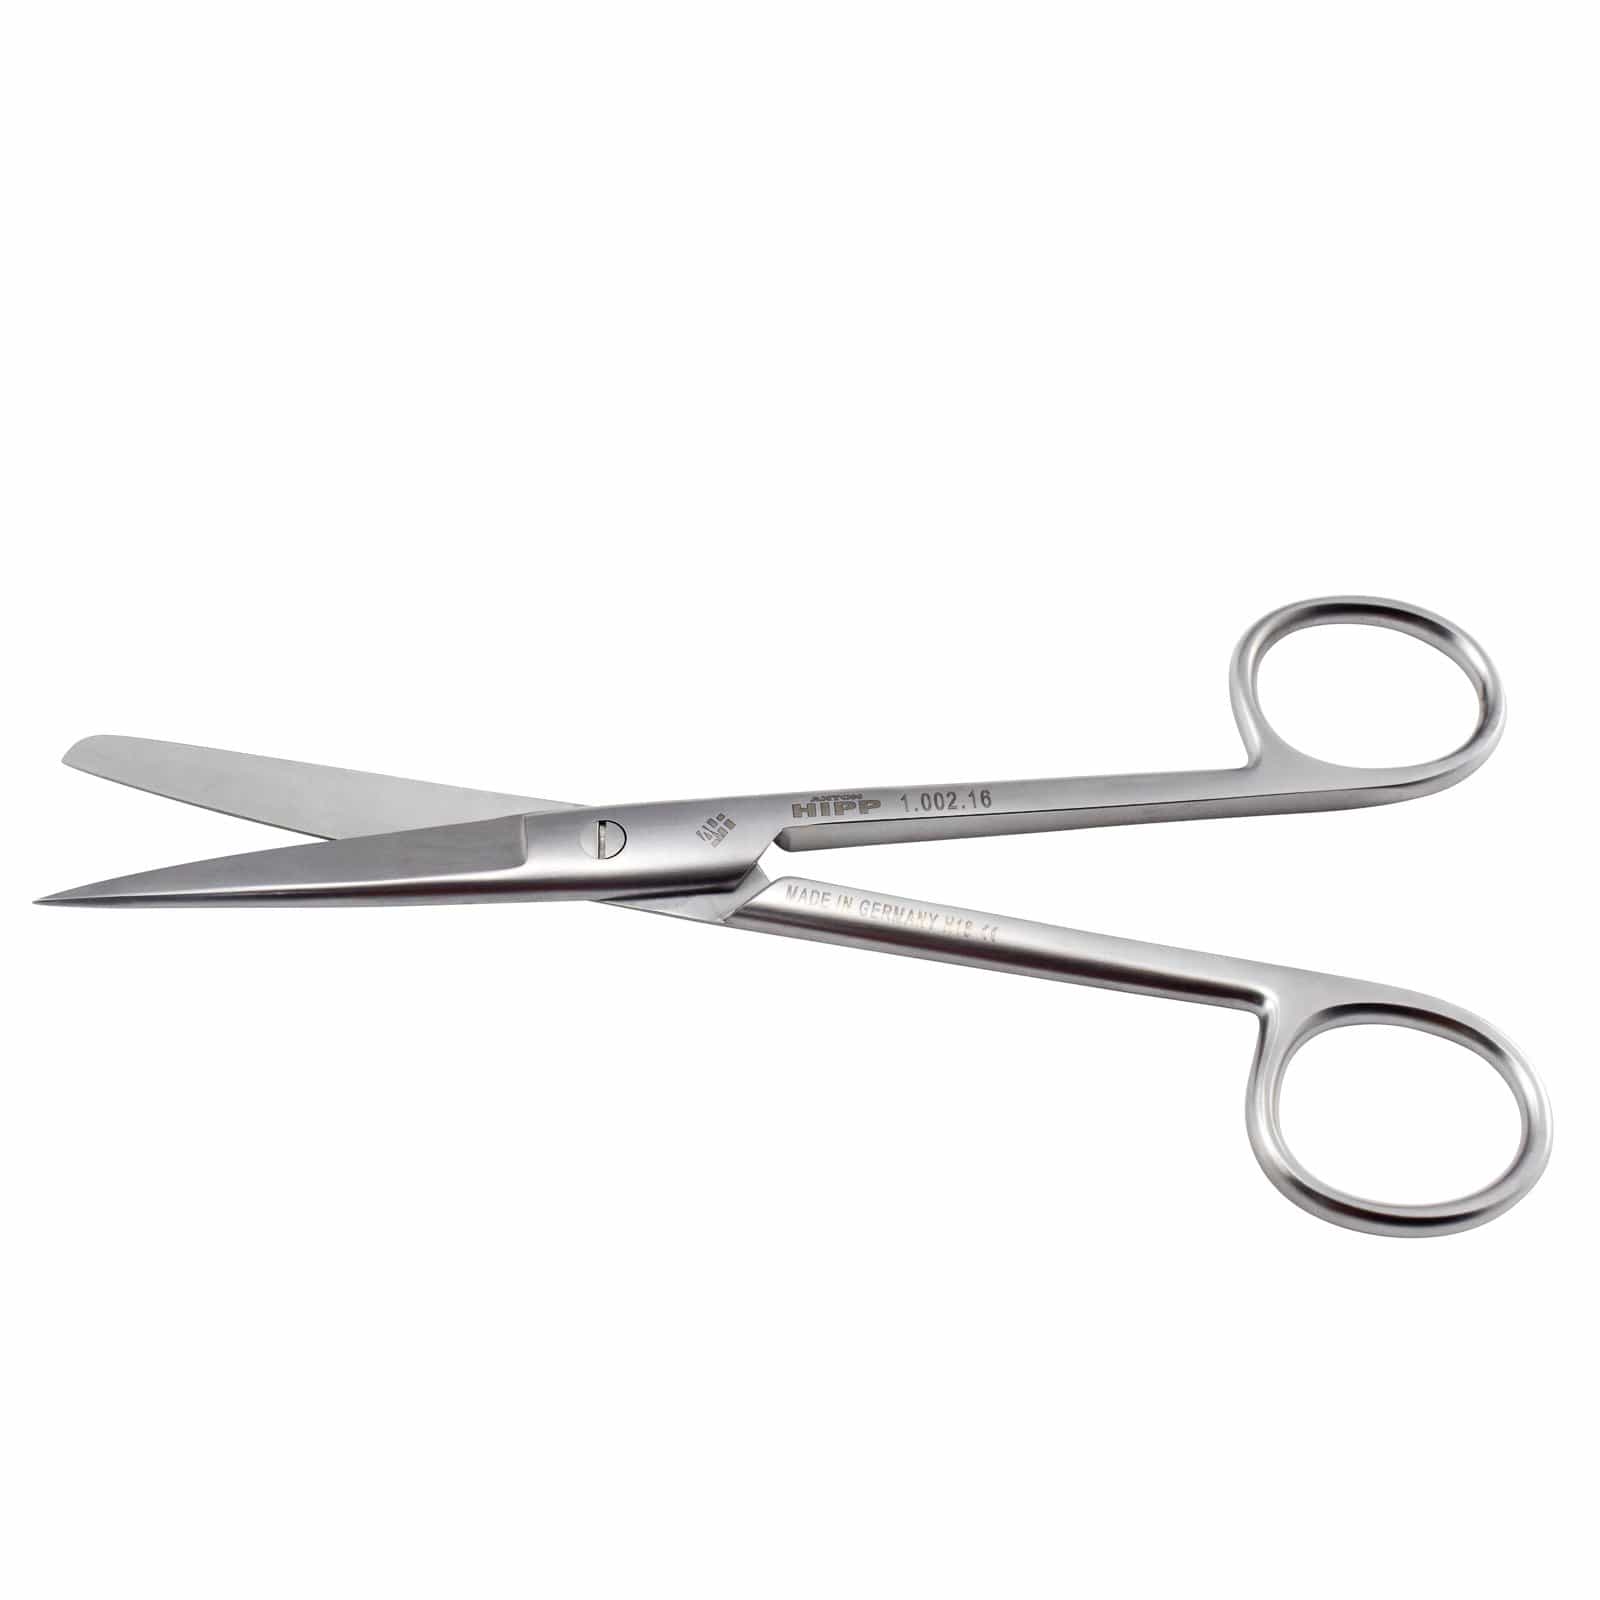 Hipp Surgical Instruments 16.5cm / Straight / Sharp/Blunt Hipp Surgical Scissors